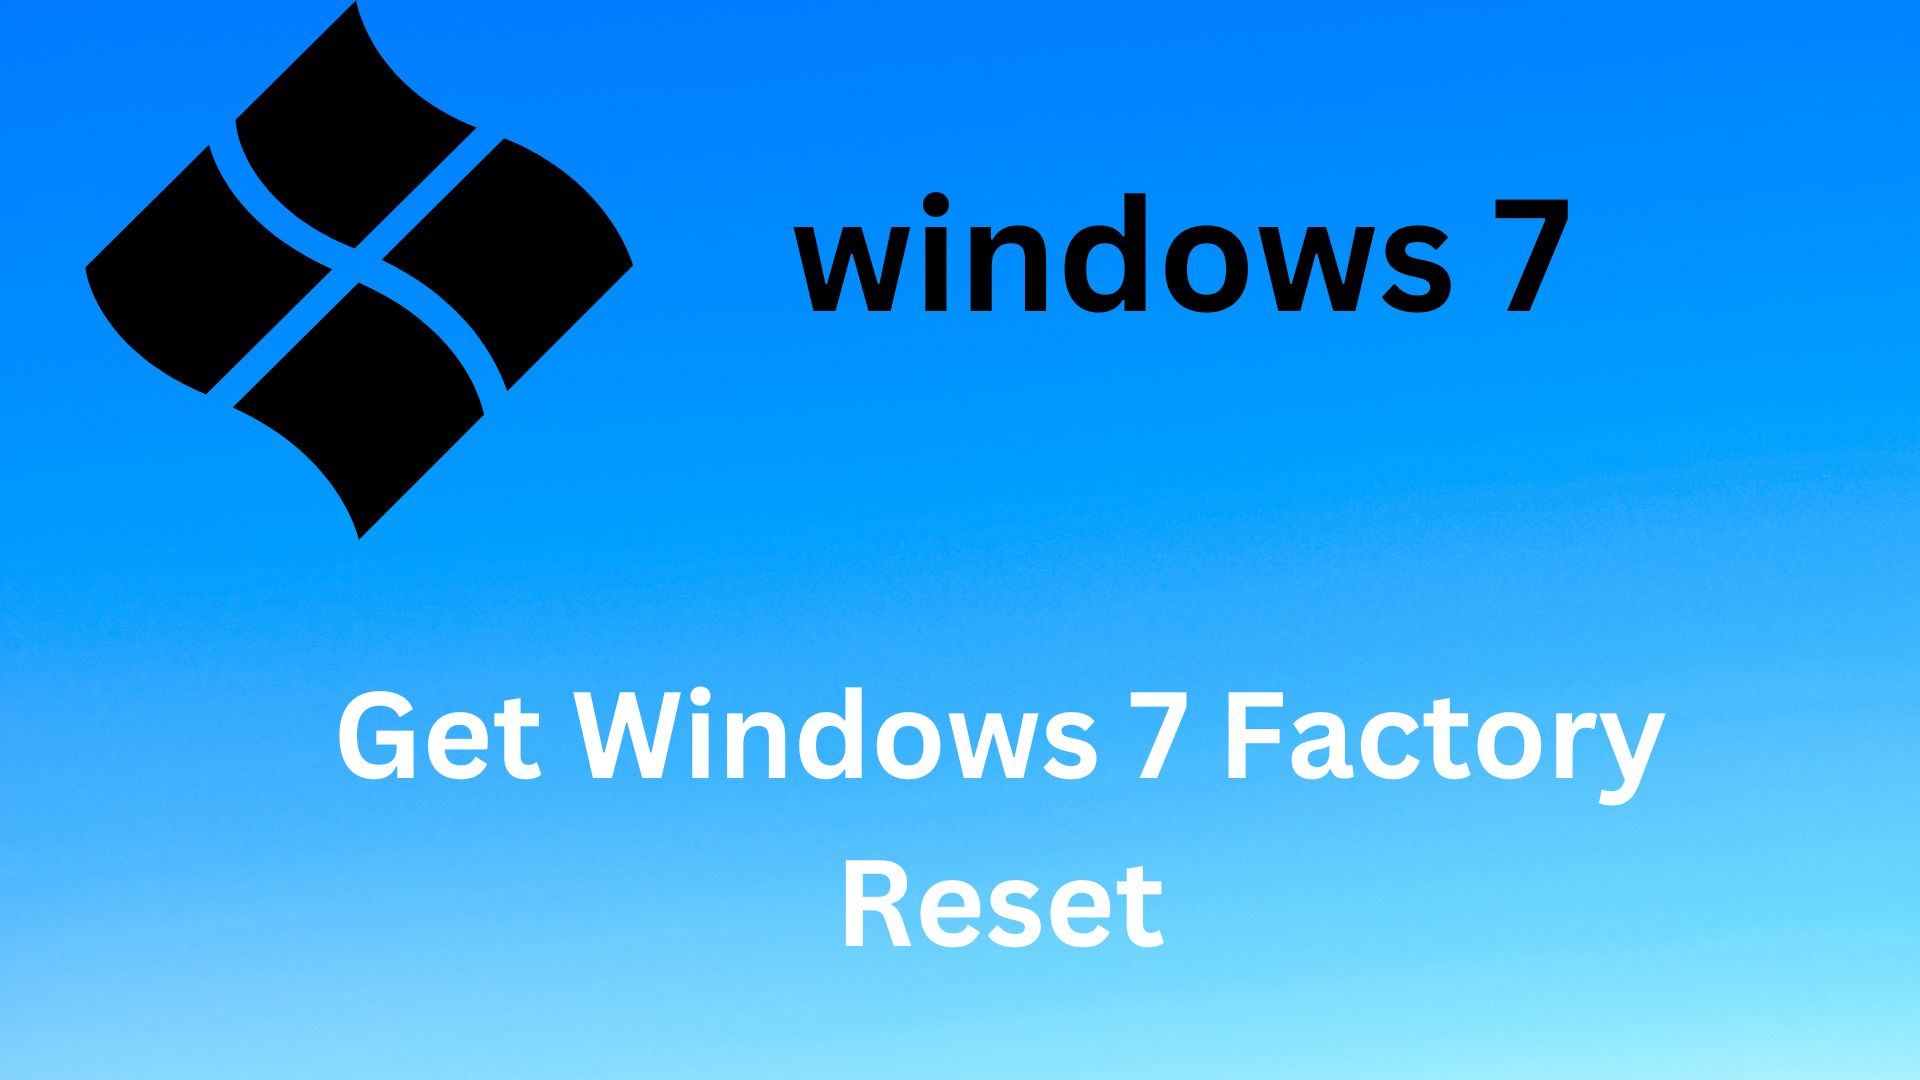 Get Windows 7 Factory Reset